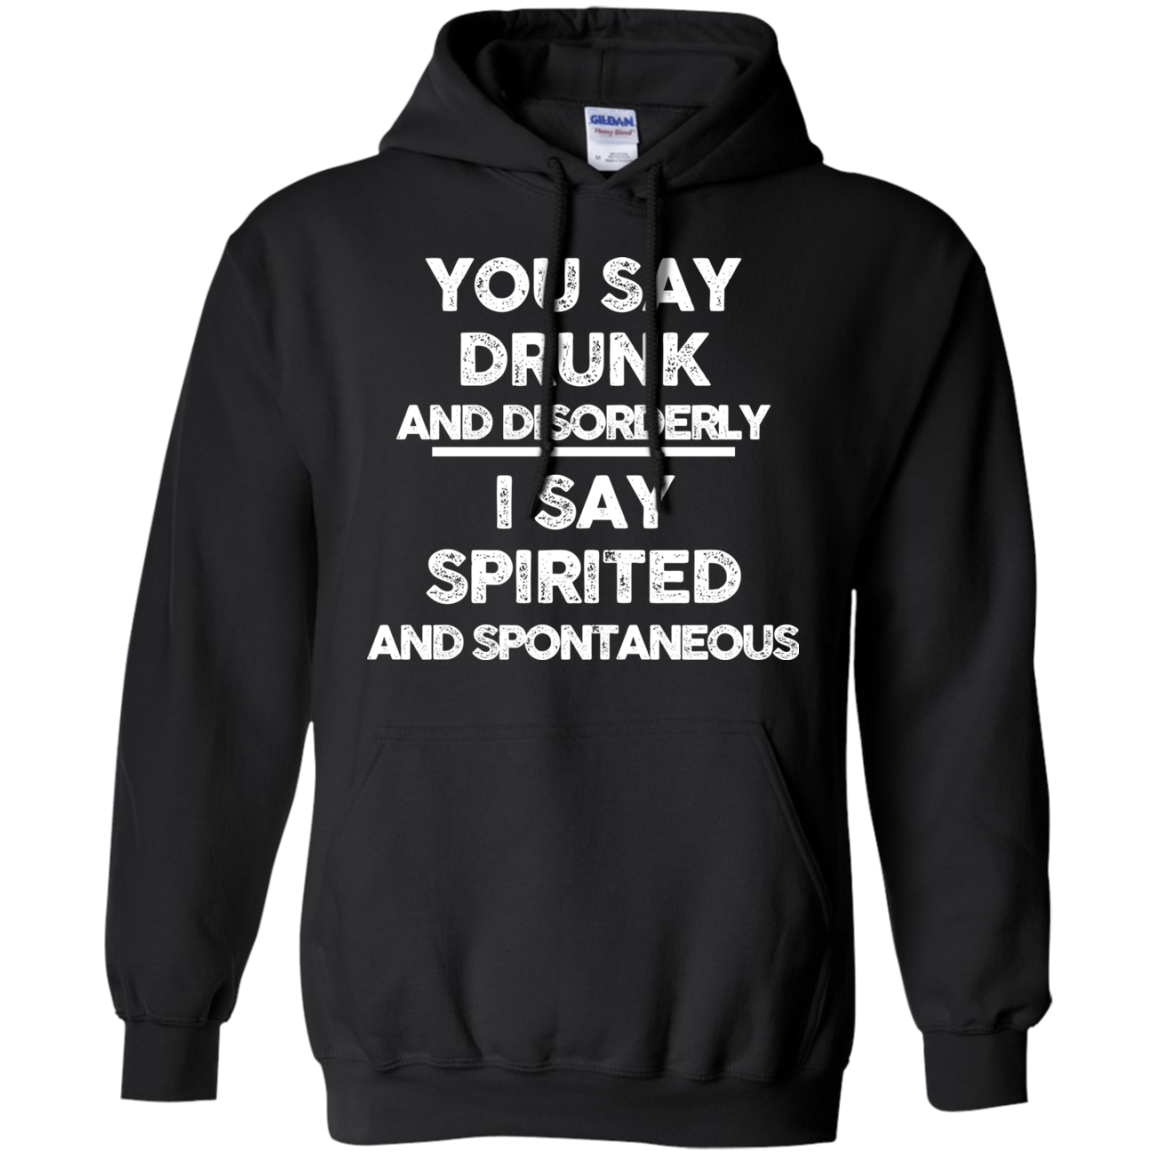 You say drunk and disorderly I say spirited and spontaneous shirt, hoo